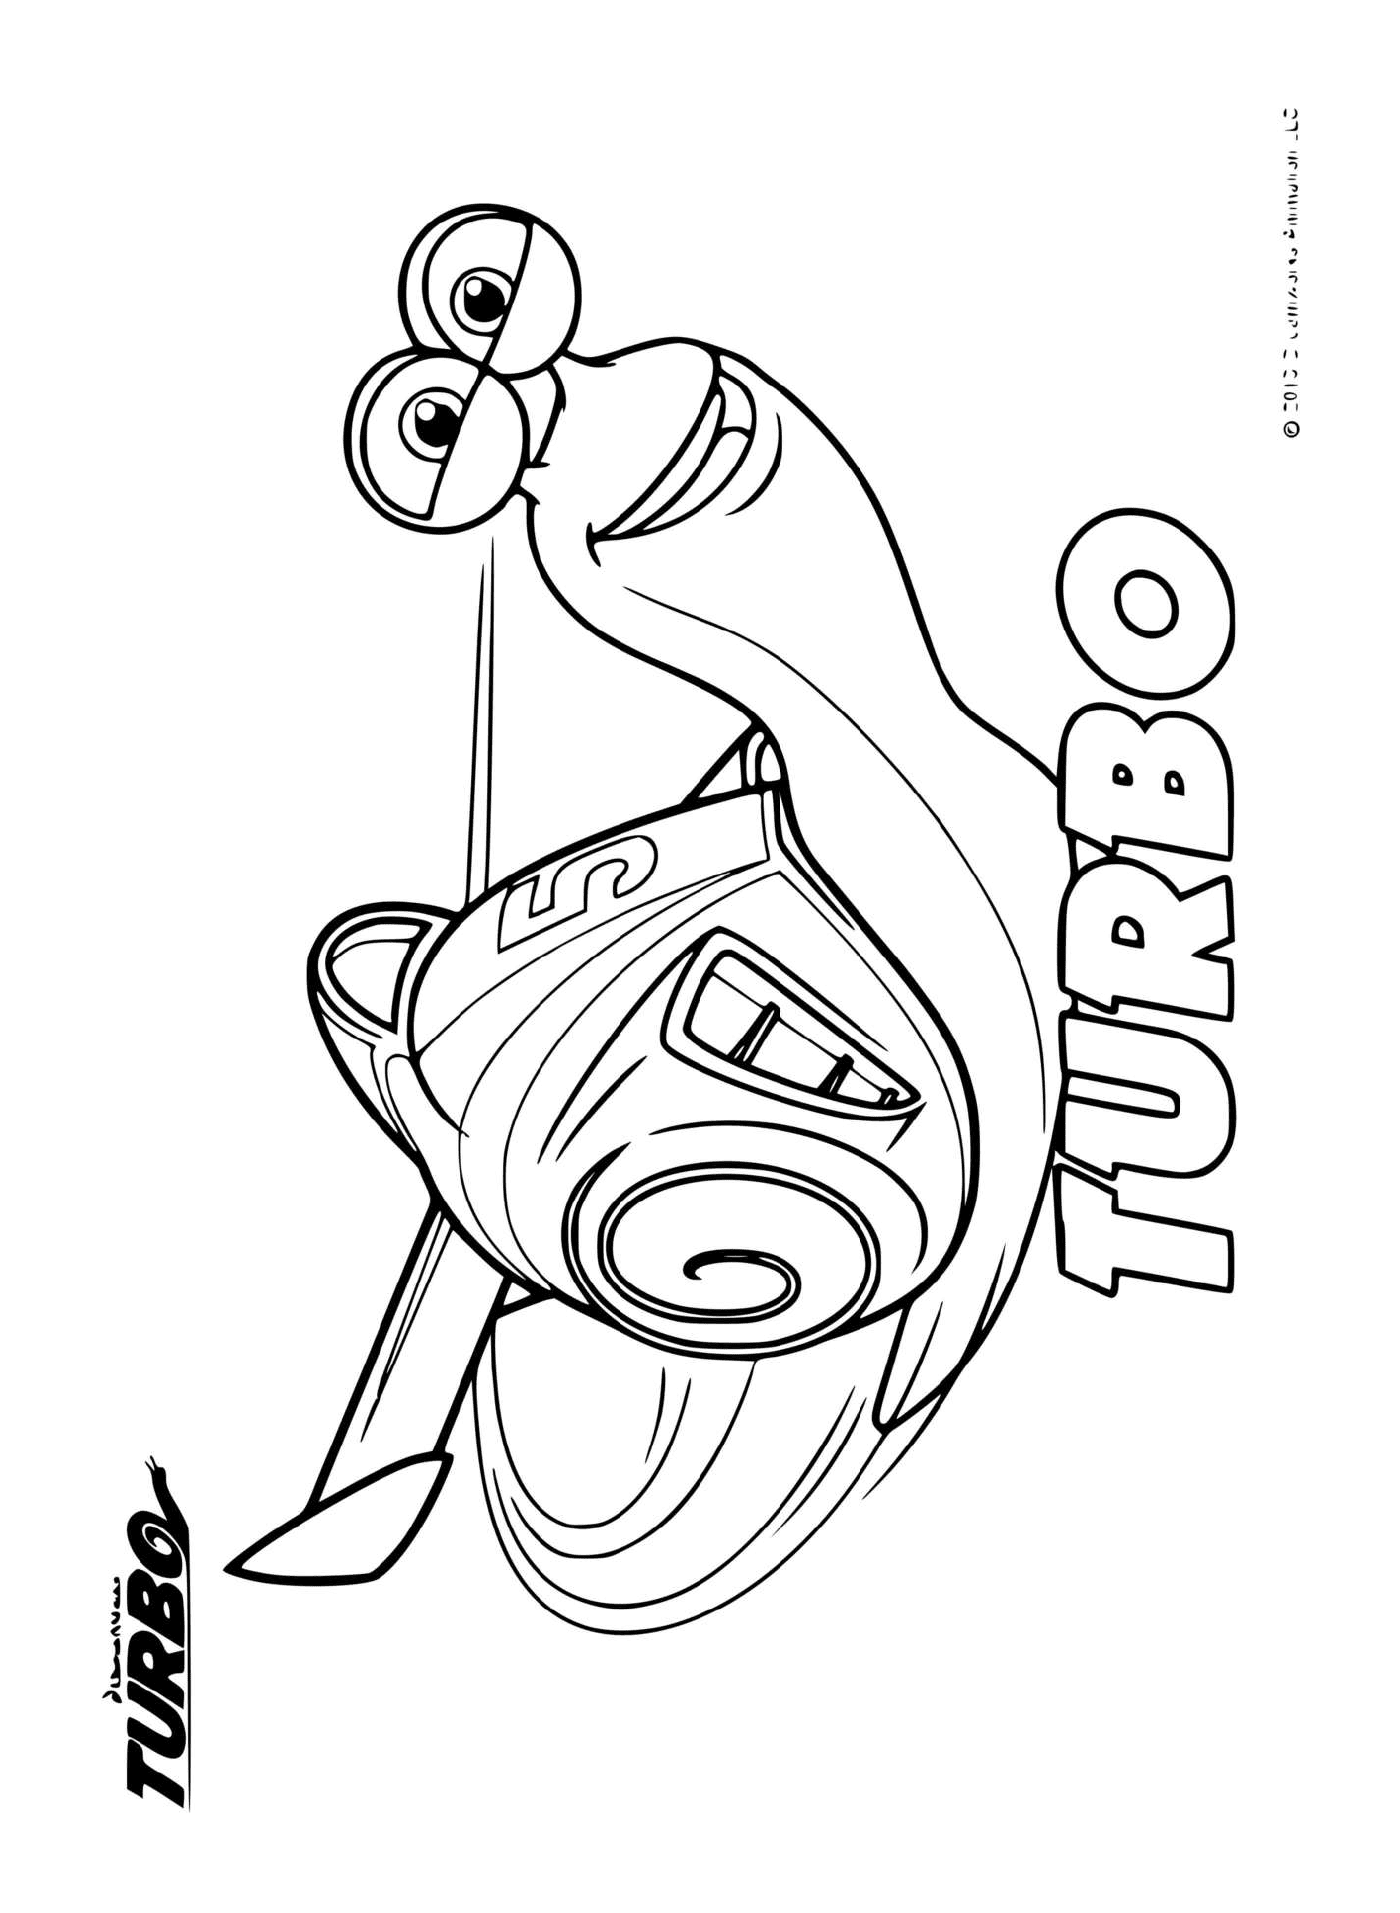   Turbo, l'escargot rapide de Dreamworks 